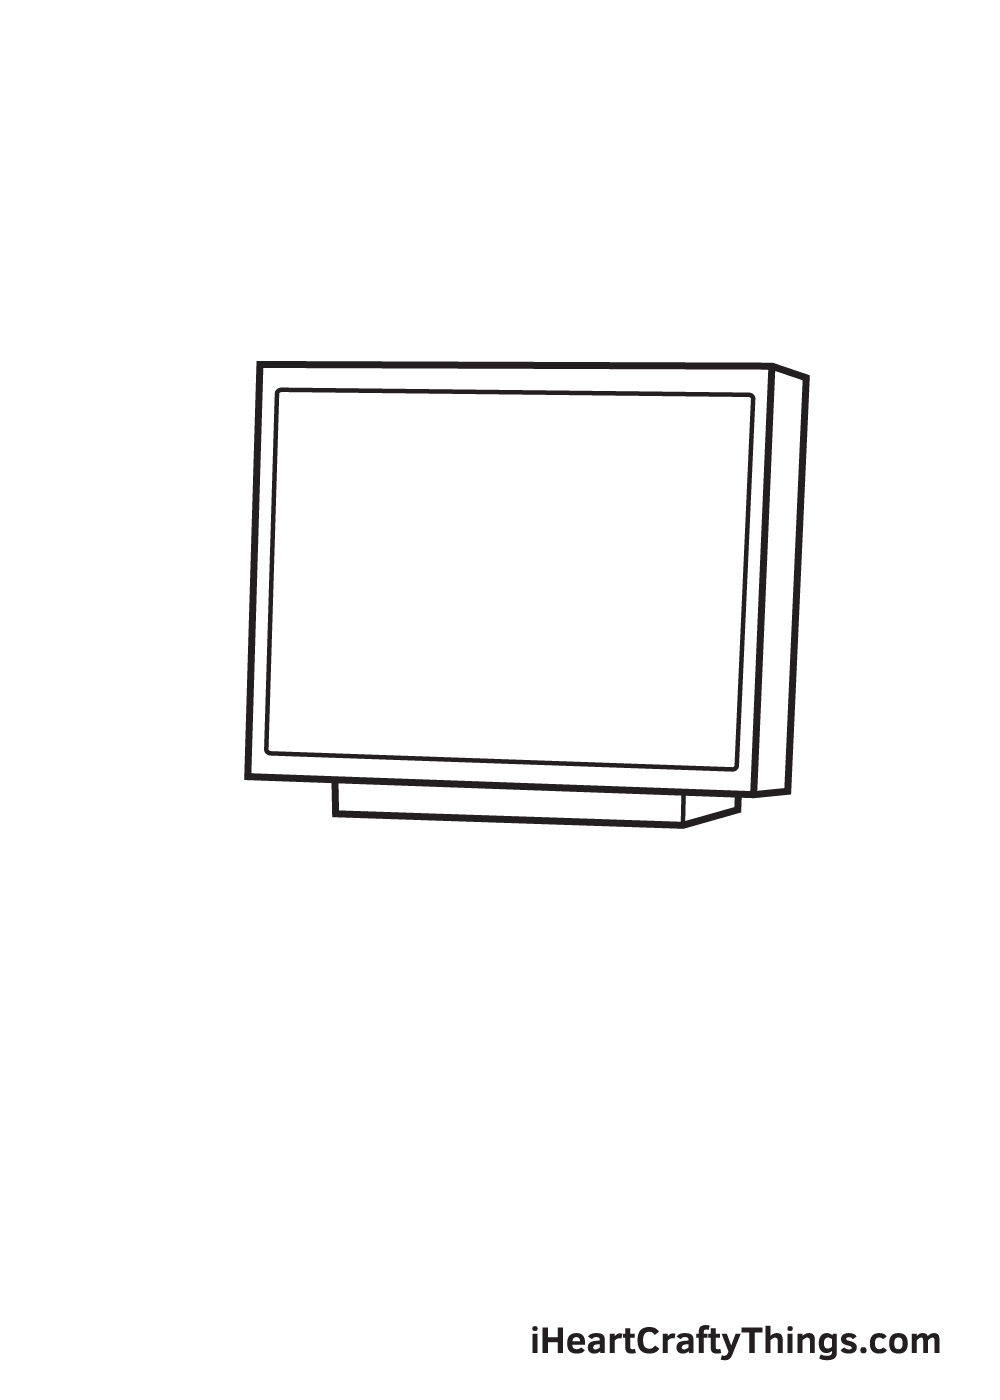 computer drawing - step 3